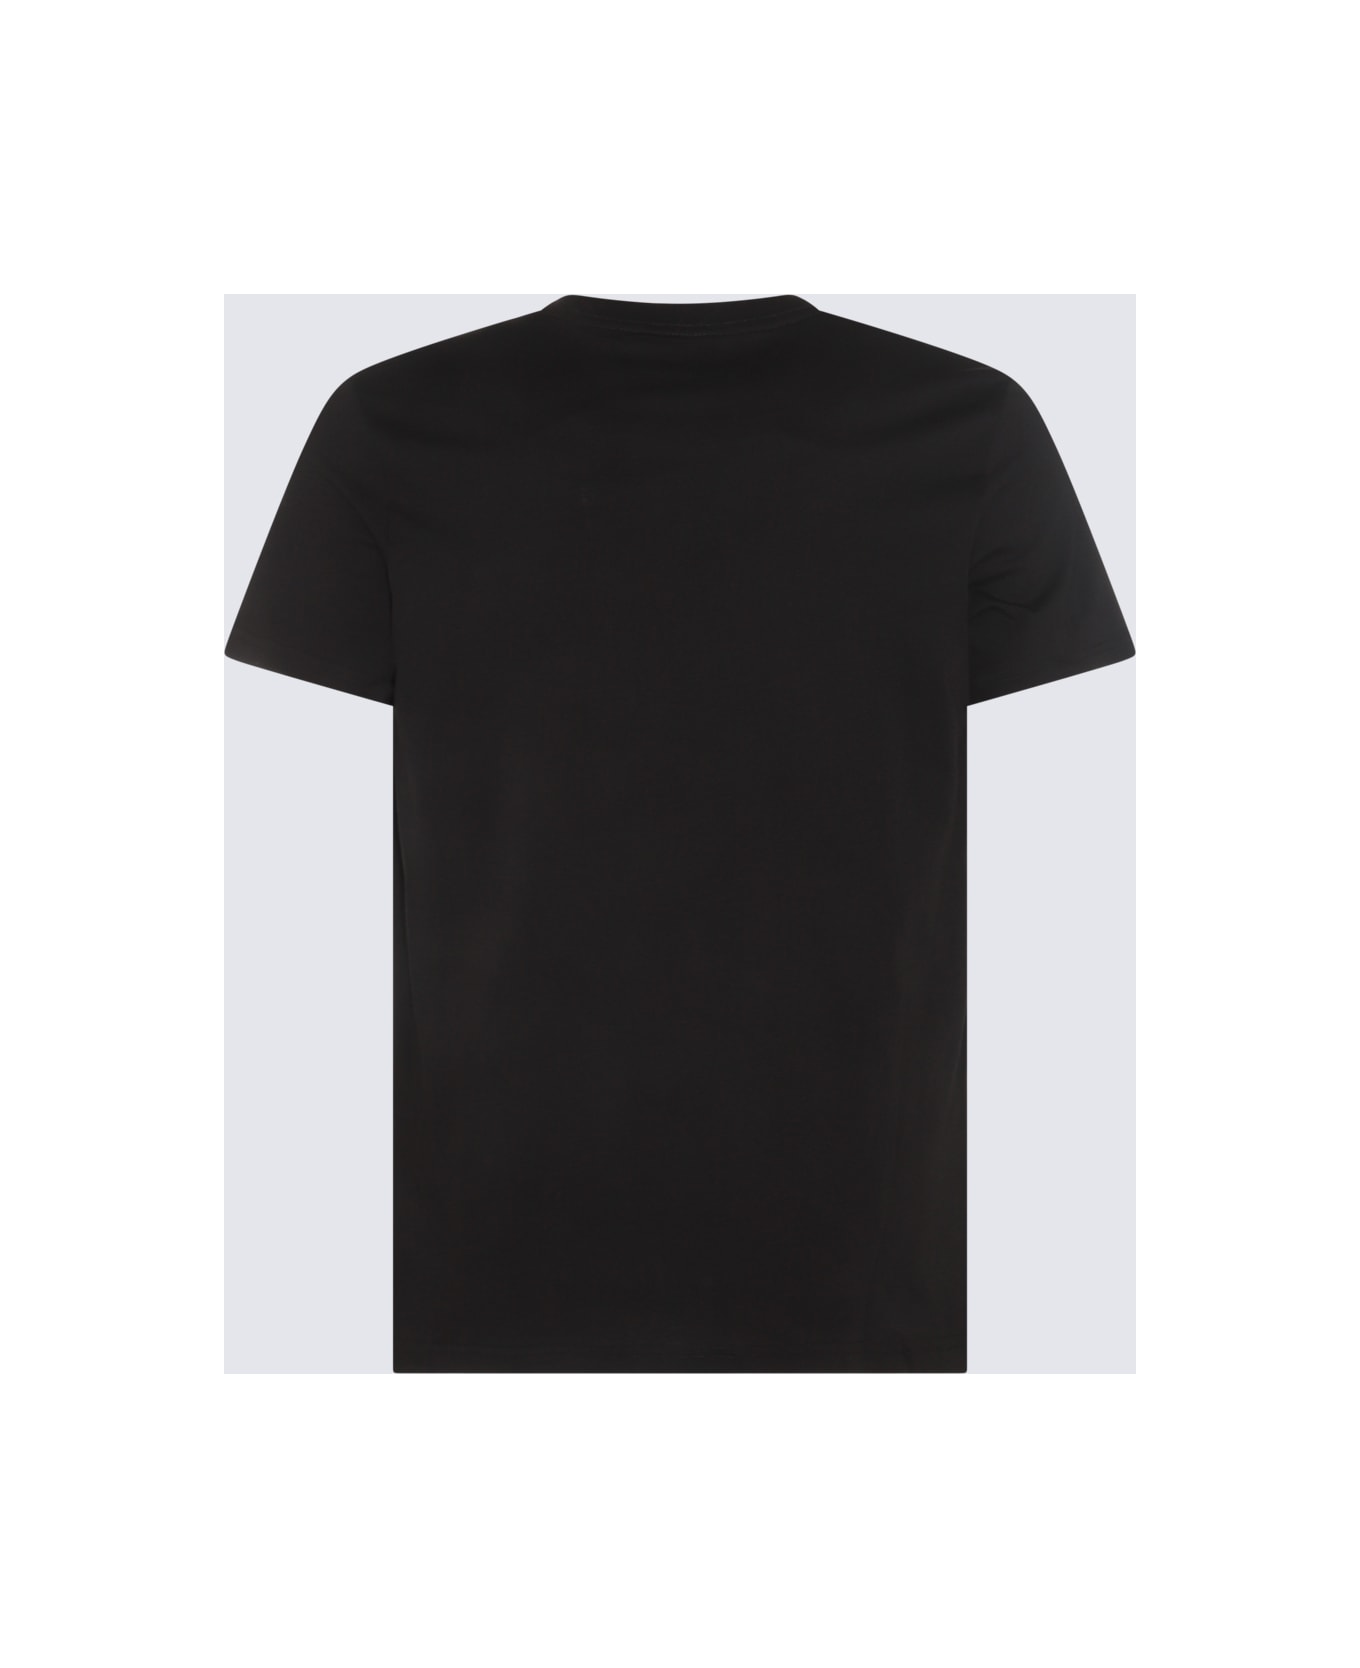 Paul Smith Black Cotton T-shirt - Black